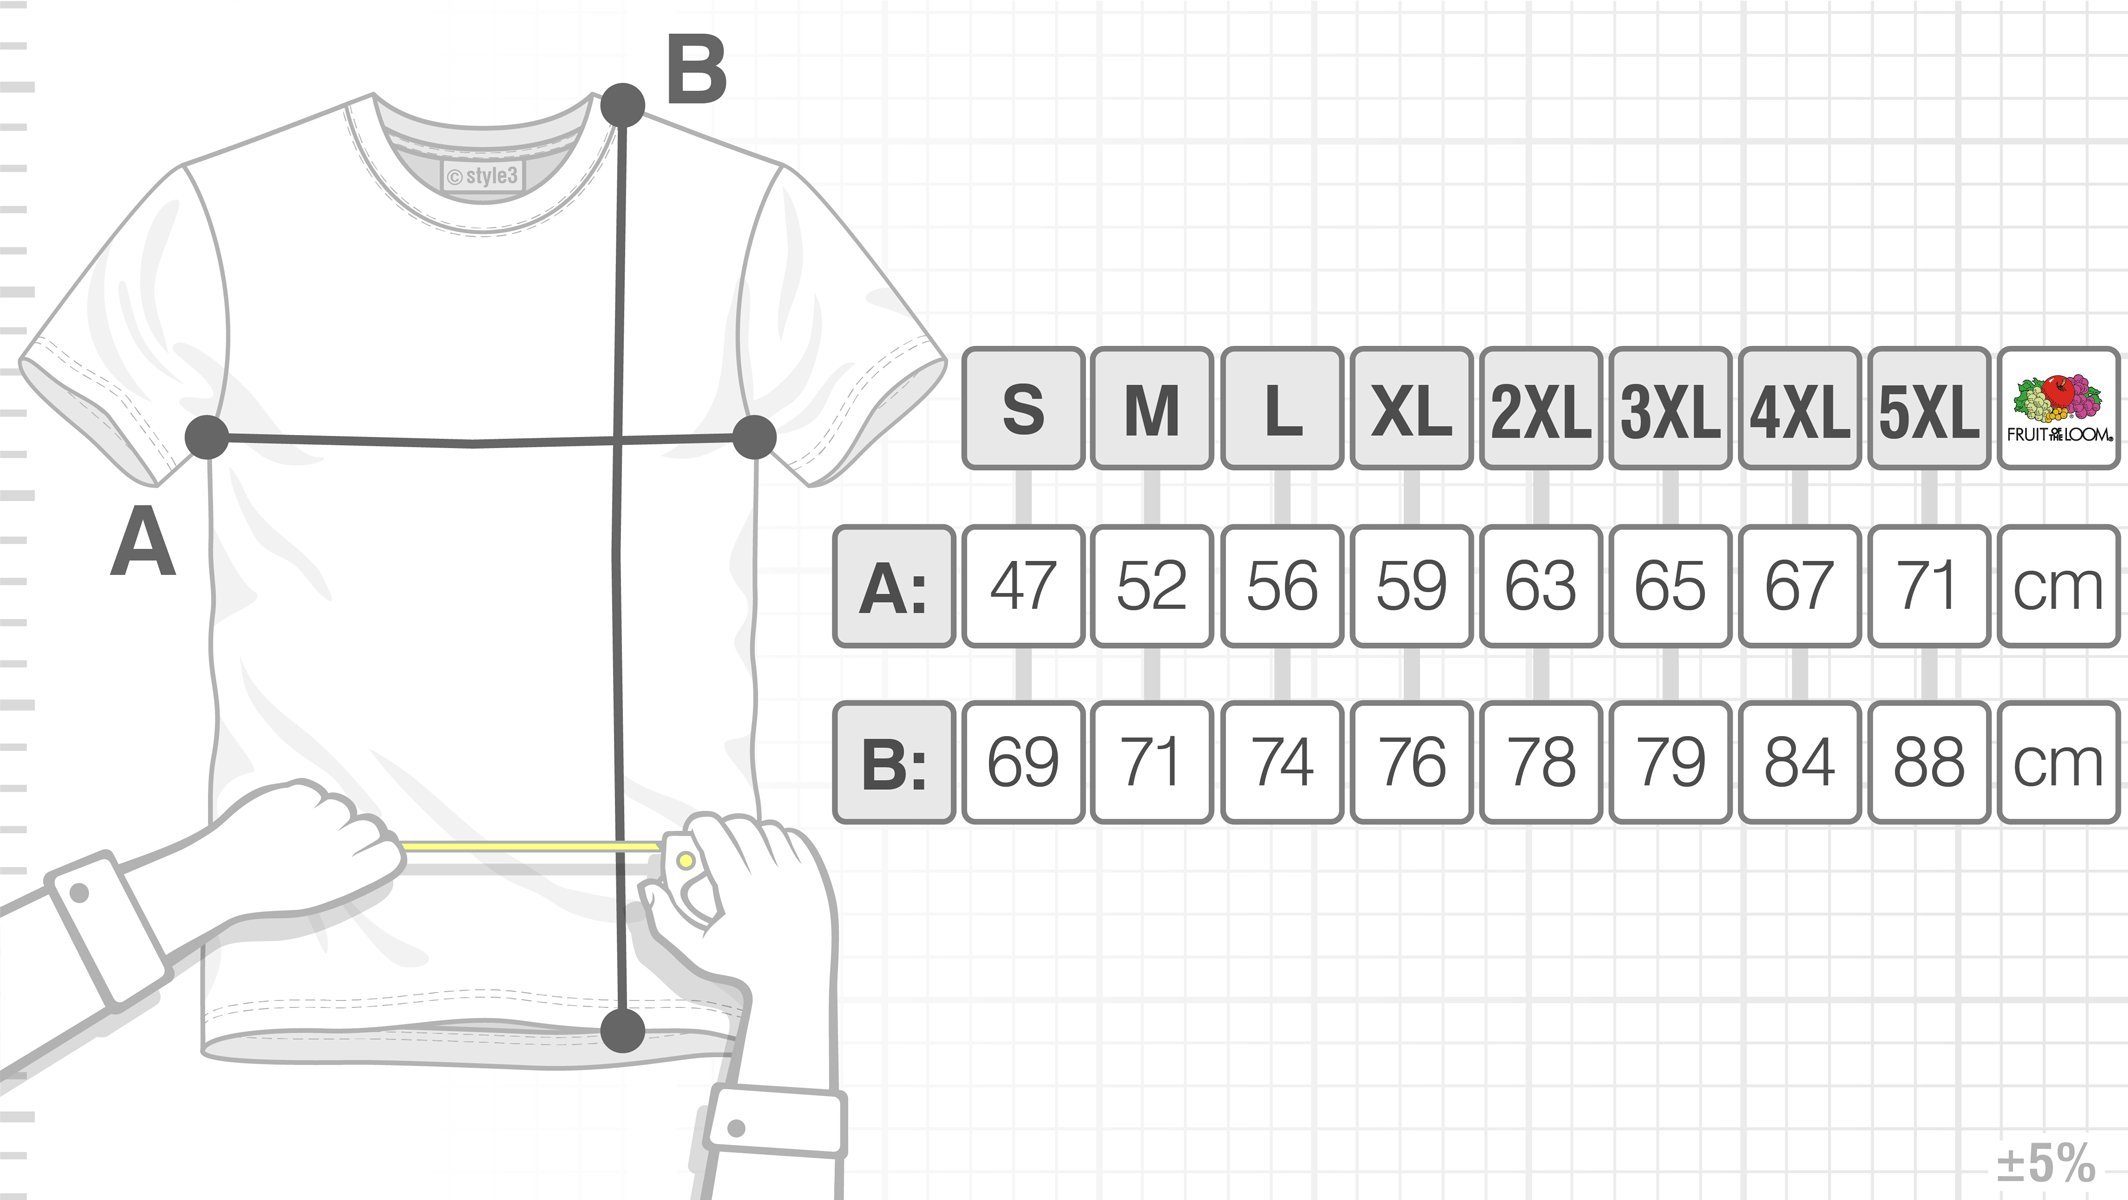 style3 Print-Shirt Herren T-Shirt Cooper Würfel Sheldon geo Escher Theory weiß Penrose Dreieck Big Bang